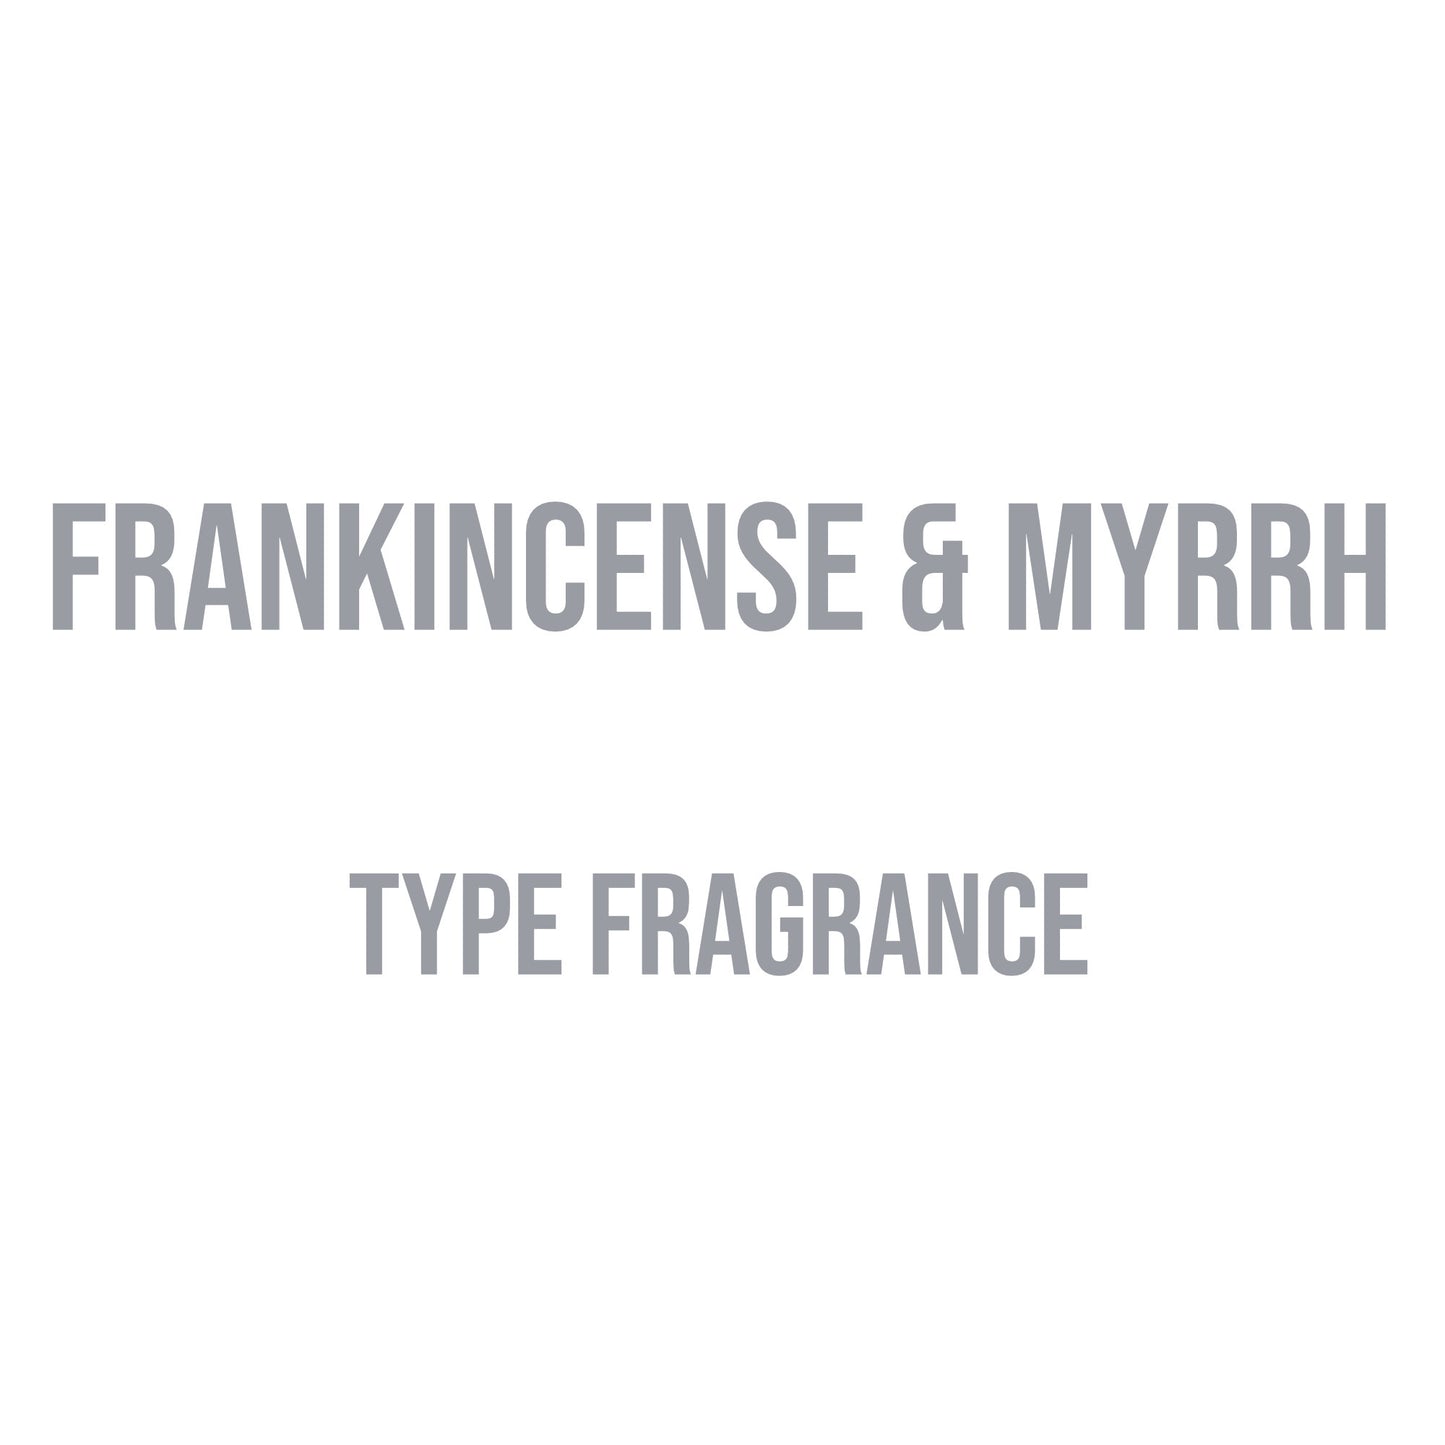 Frankincense & Myrrh Type Fragrance